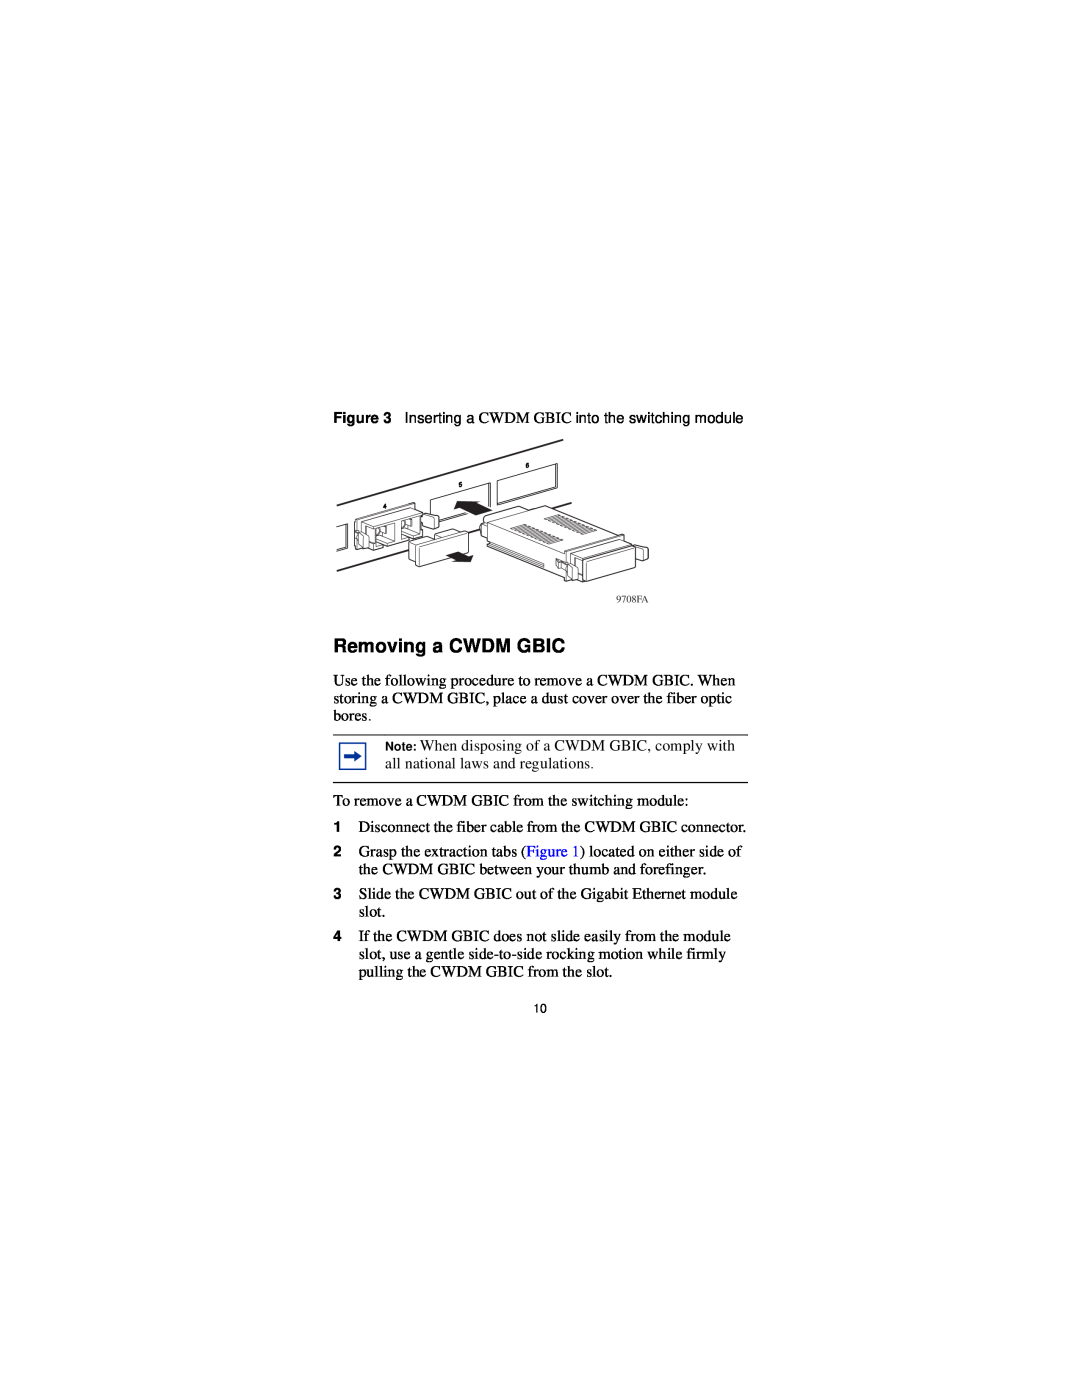 Nortel Networks SFINA286V13, AA1419005 manual Removing a CWDM GBIC 